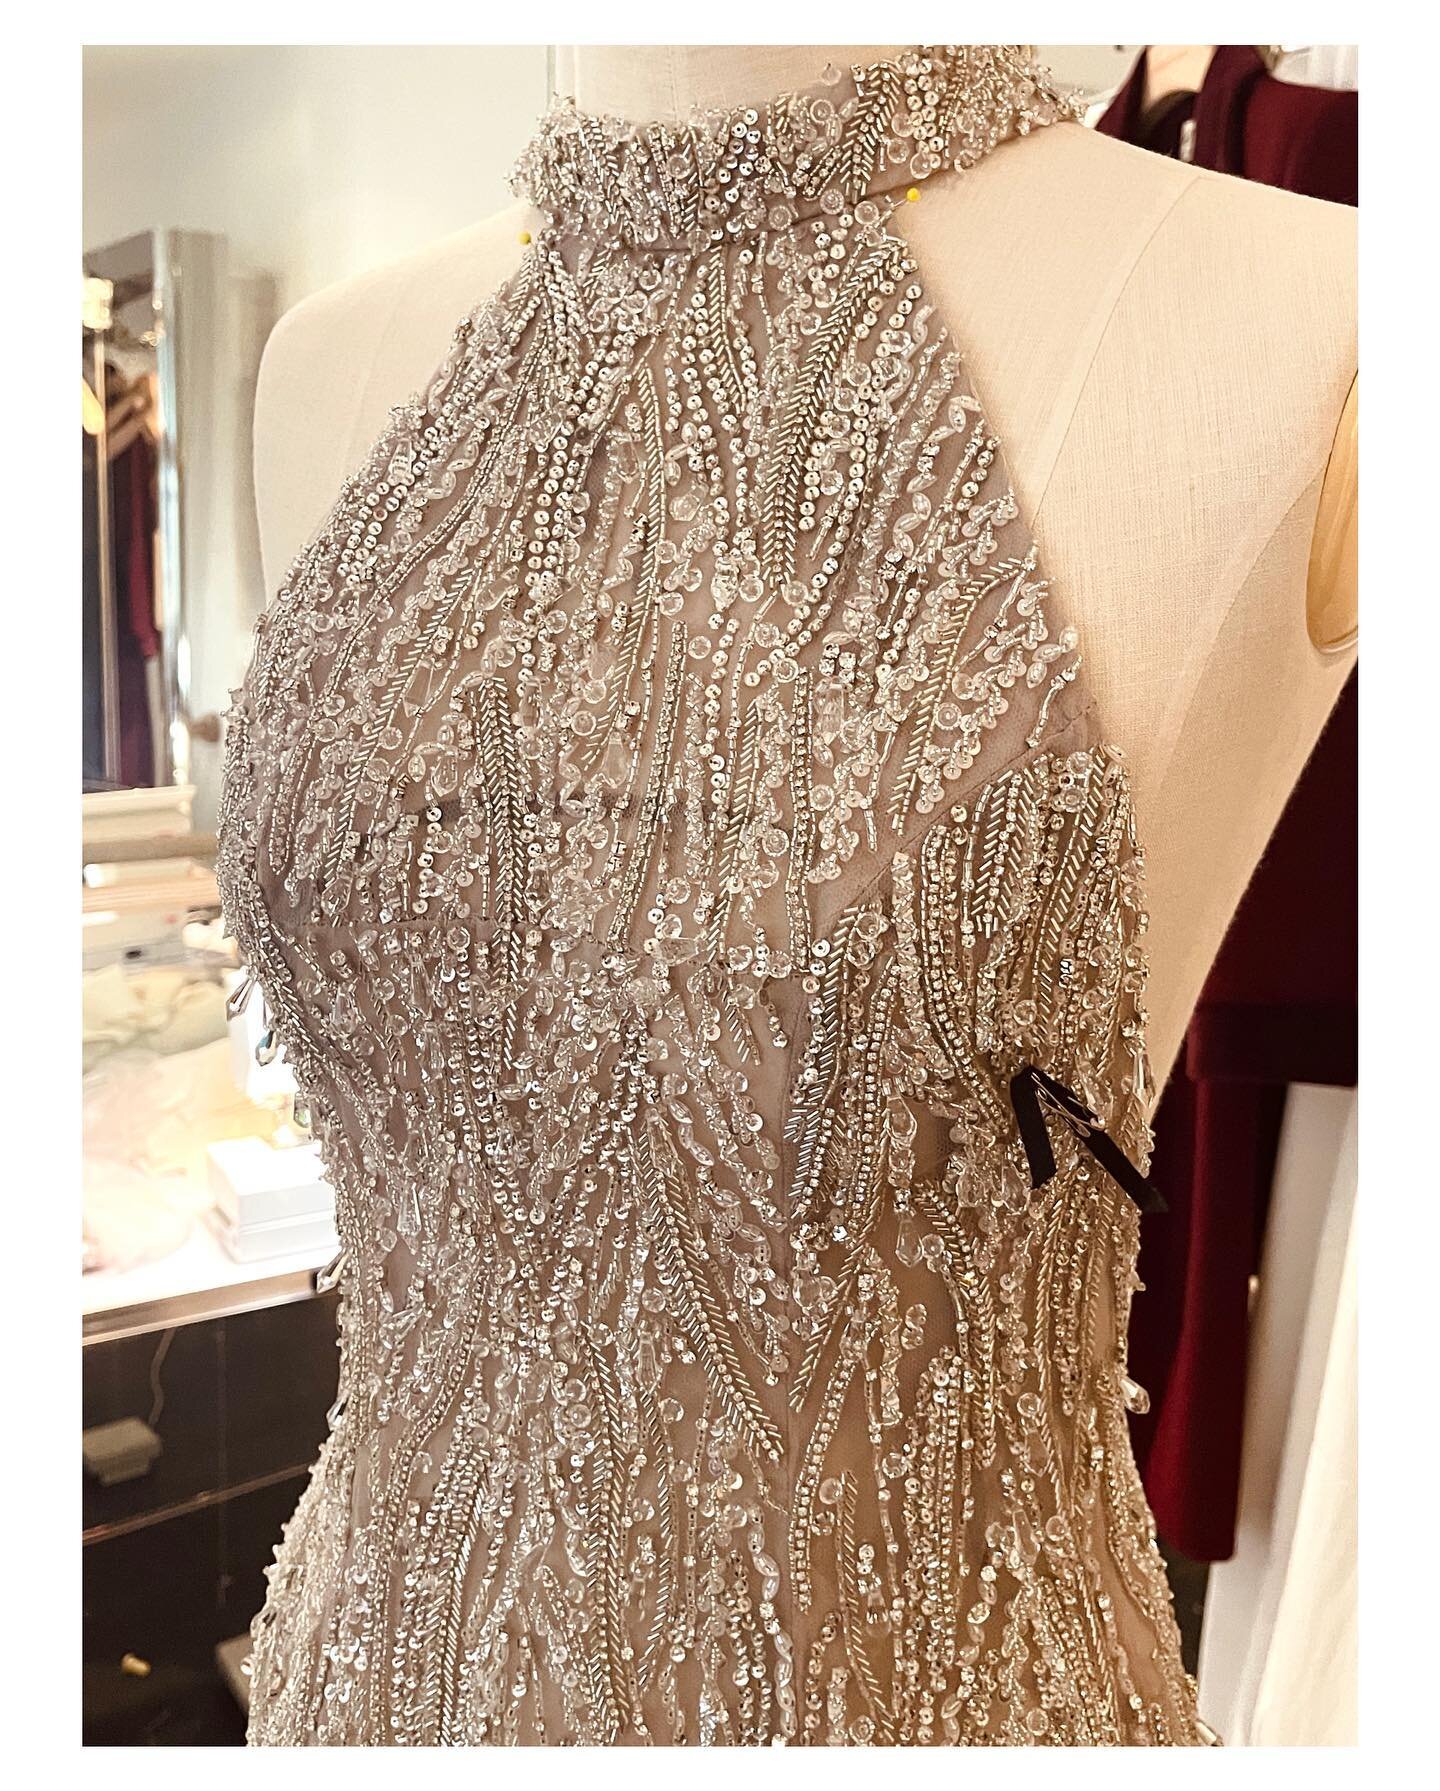 Details of the Kartini dress ✂️

#workinprogress #inthestudio #gainsbourgatelier #beadedeveningdress #weddingdress
#madeinlondon